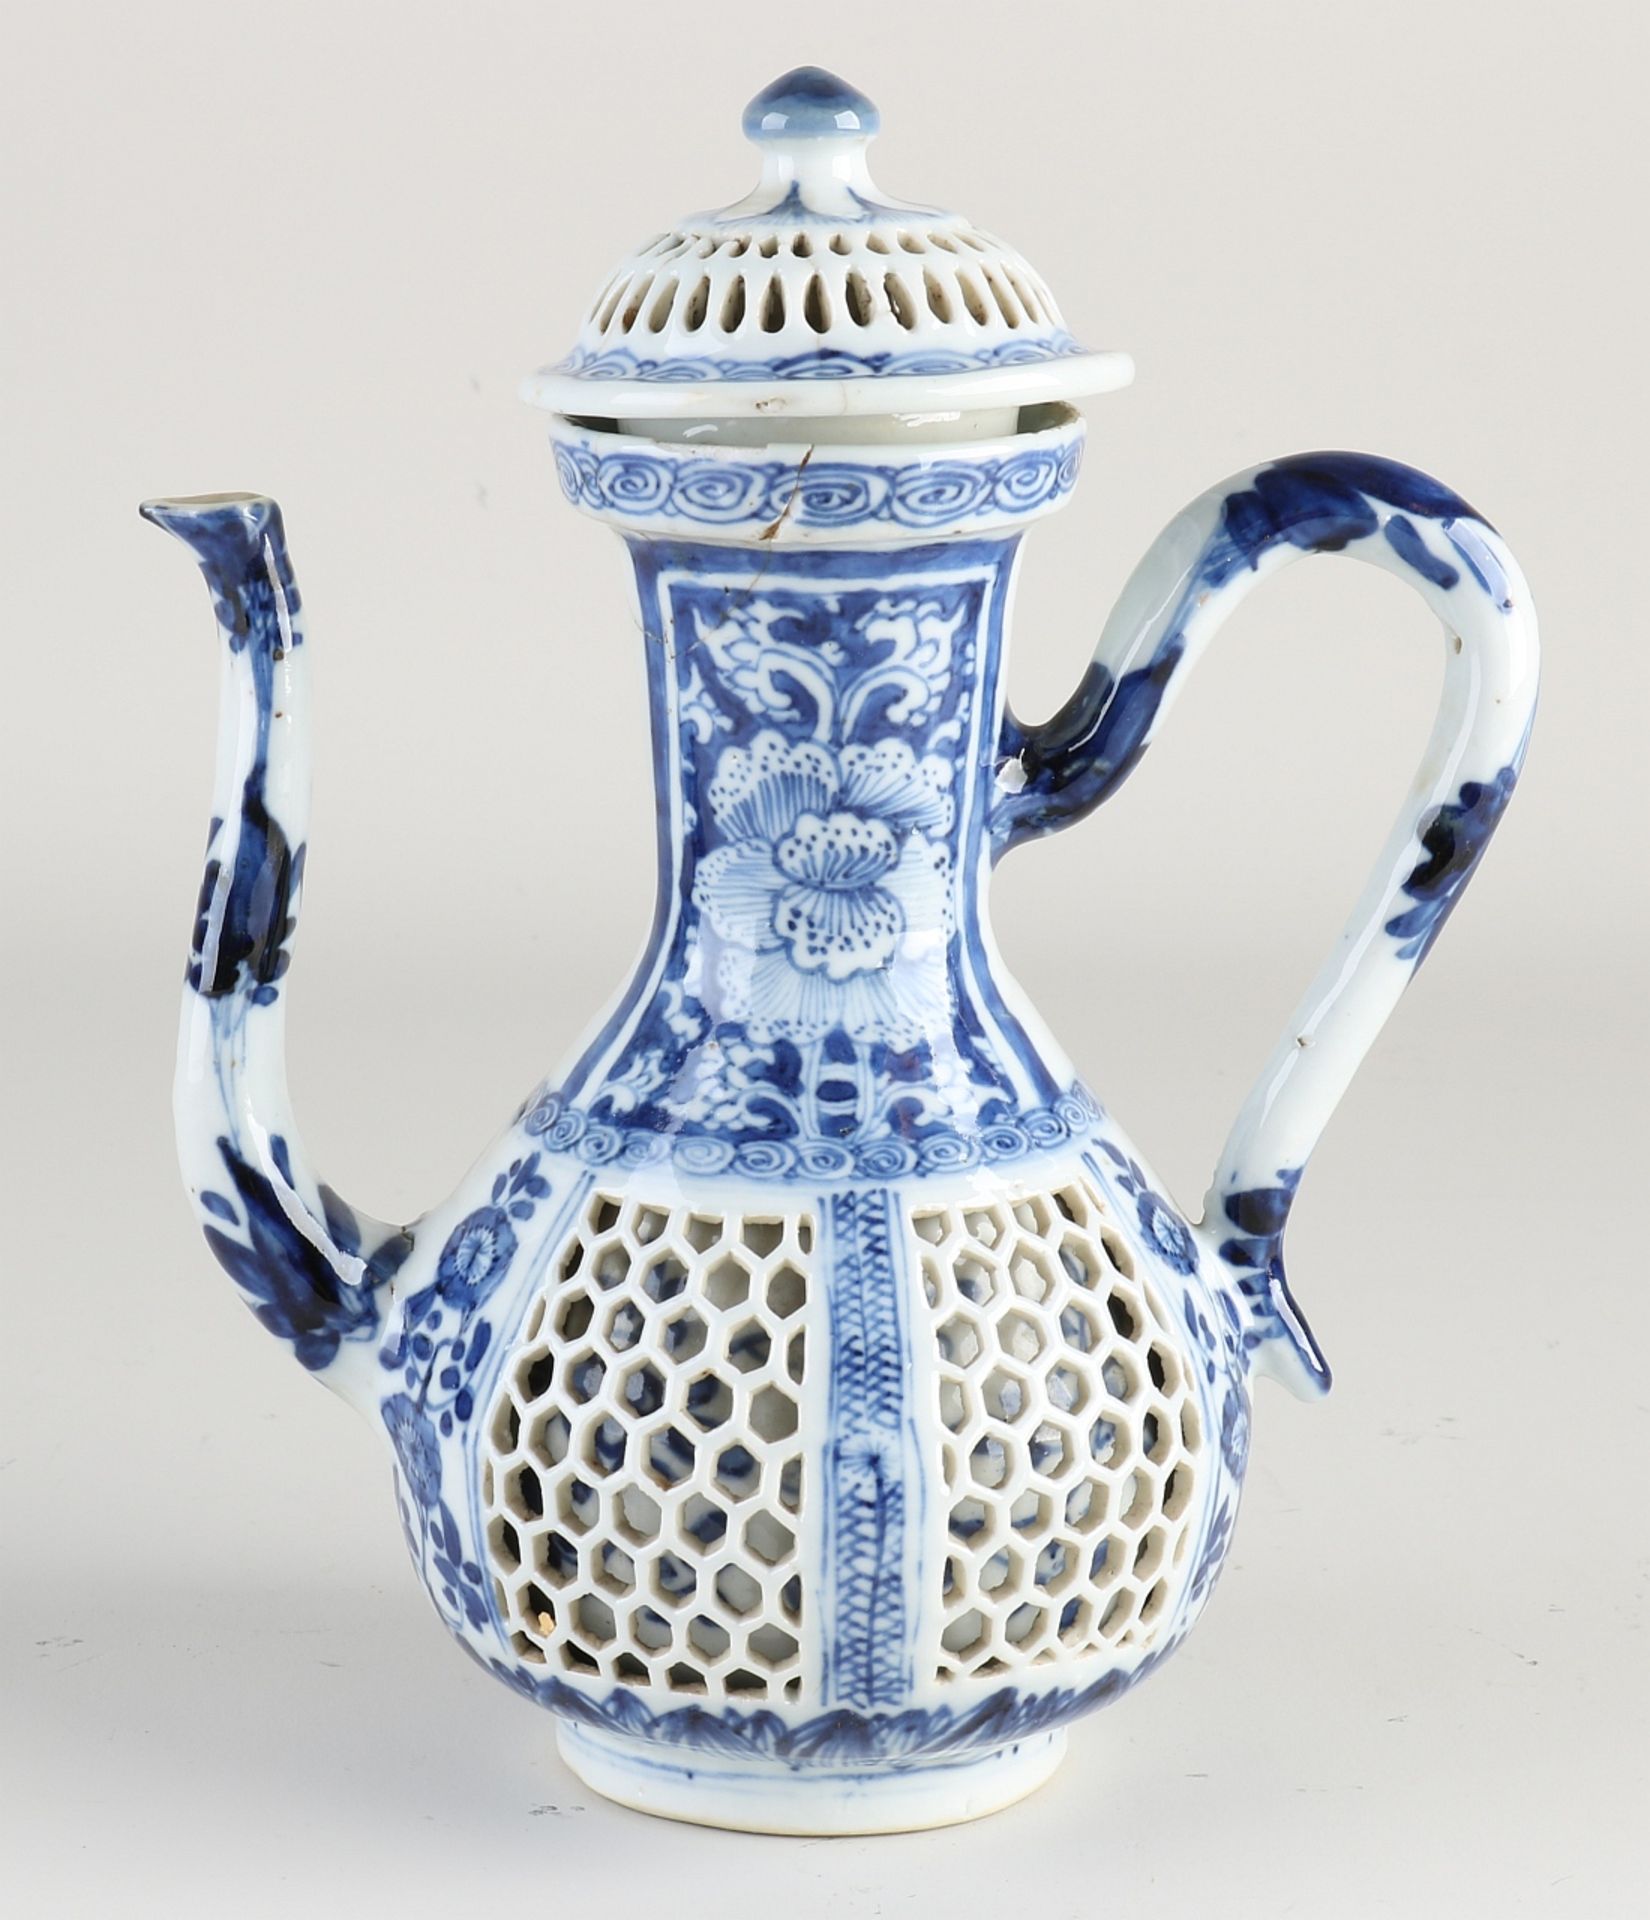 Rare 17th century Chinese jug - Image 2 of 3